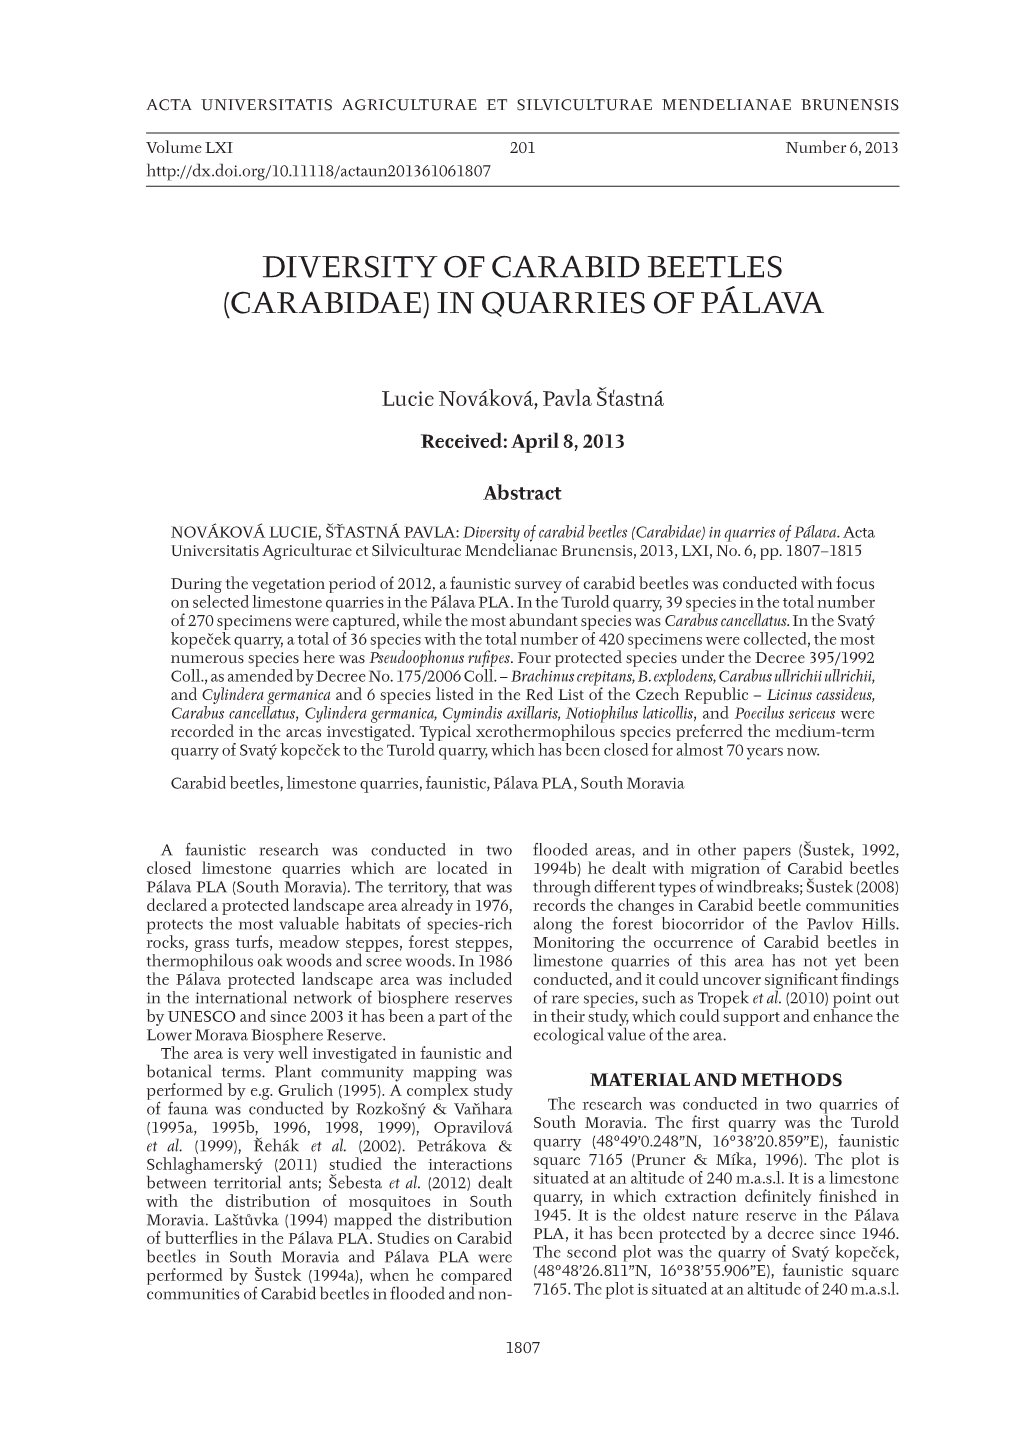 Diversity of Carabid Beetles (Carabidae) in Quarries of Pálava